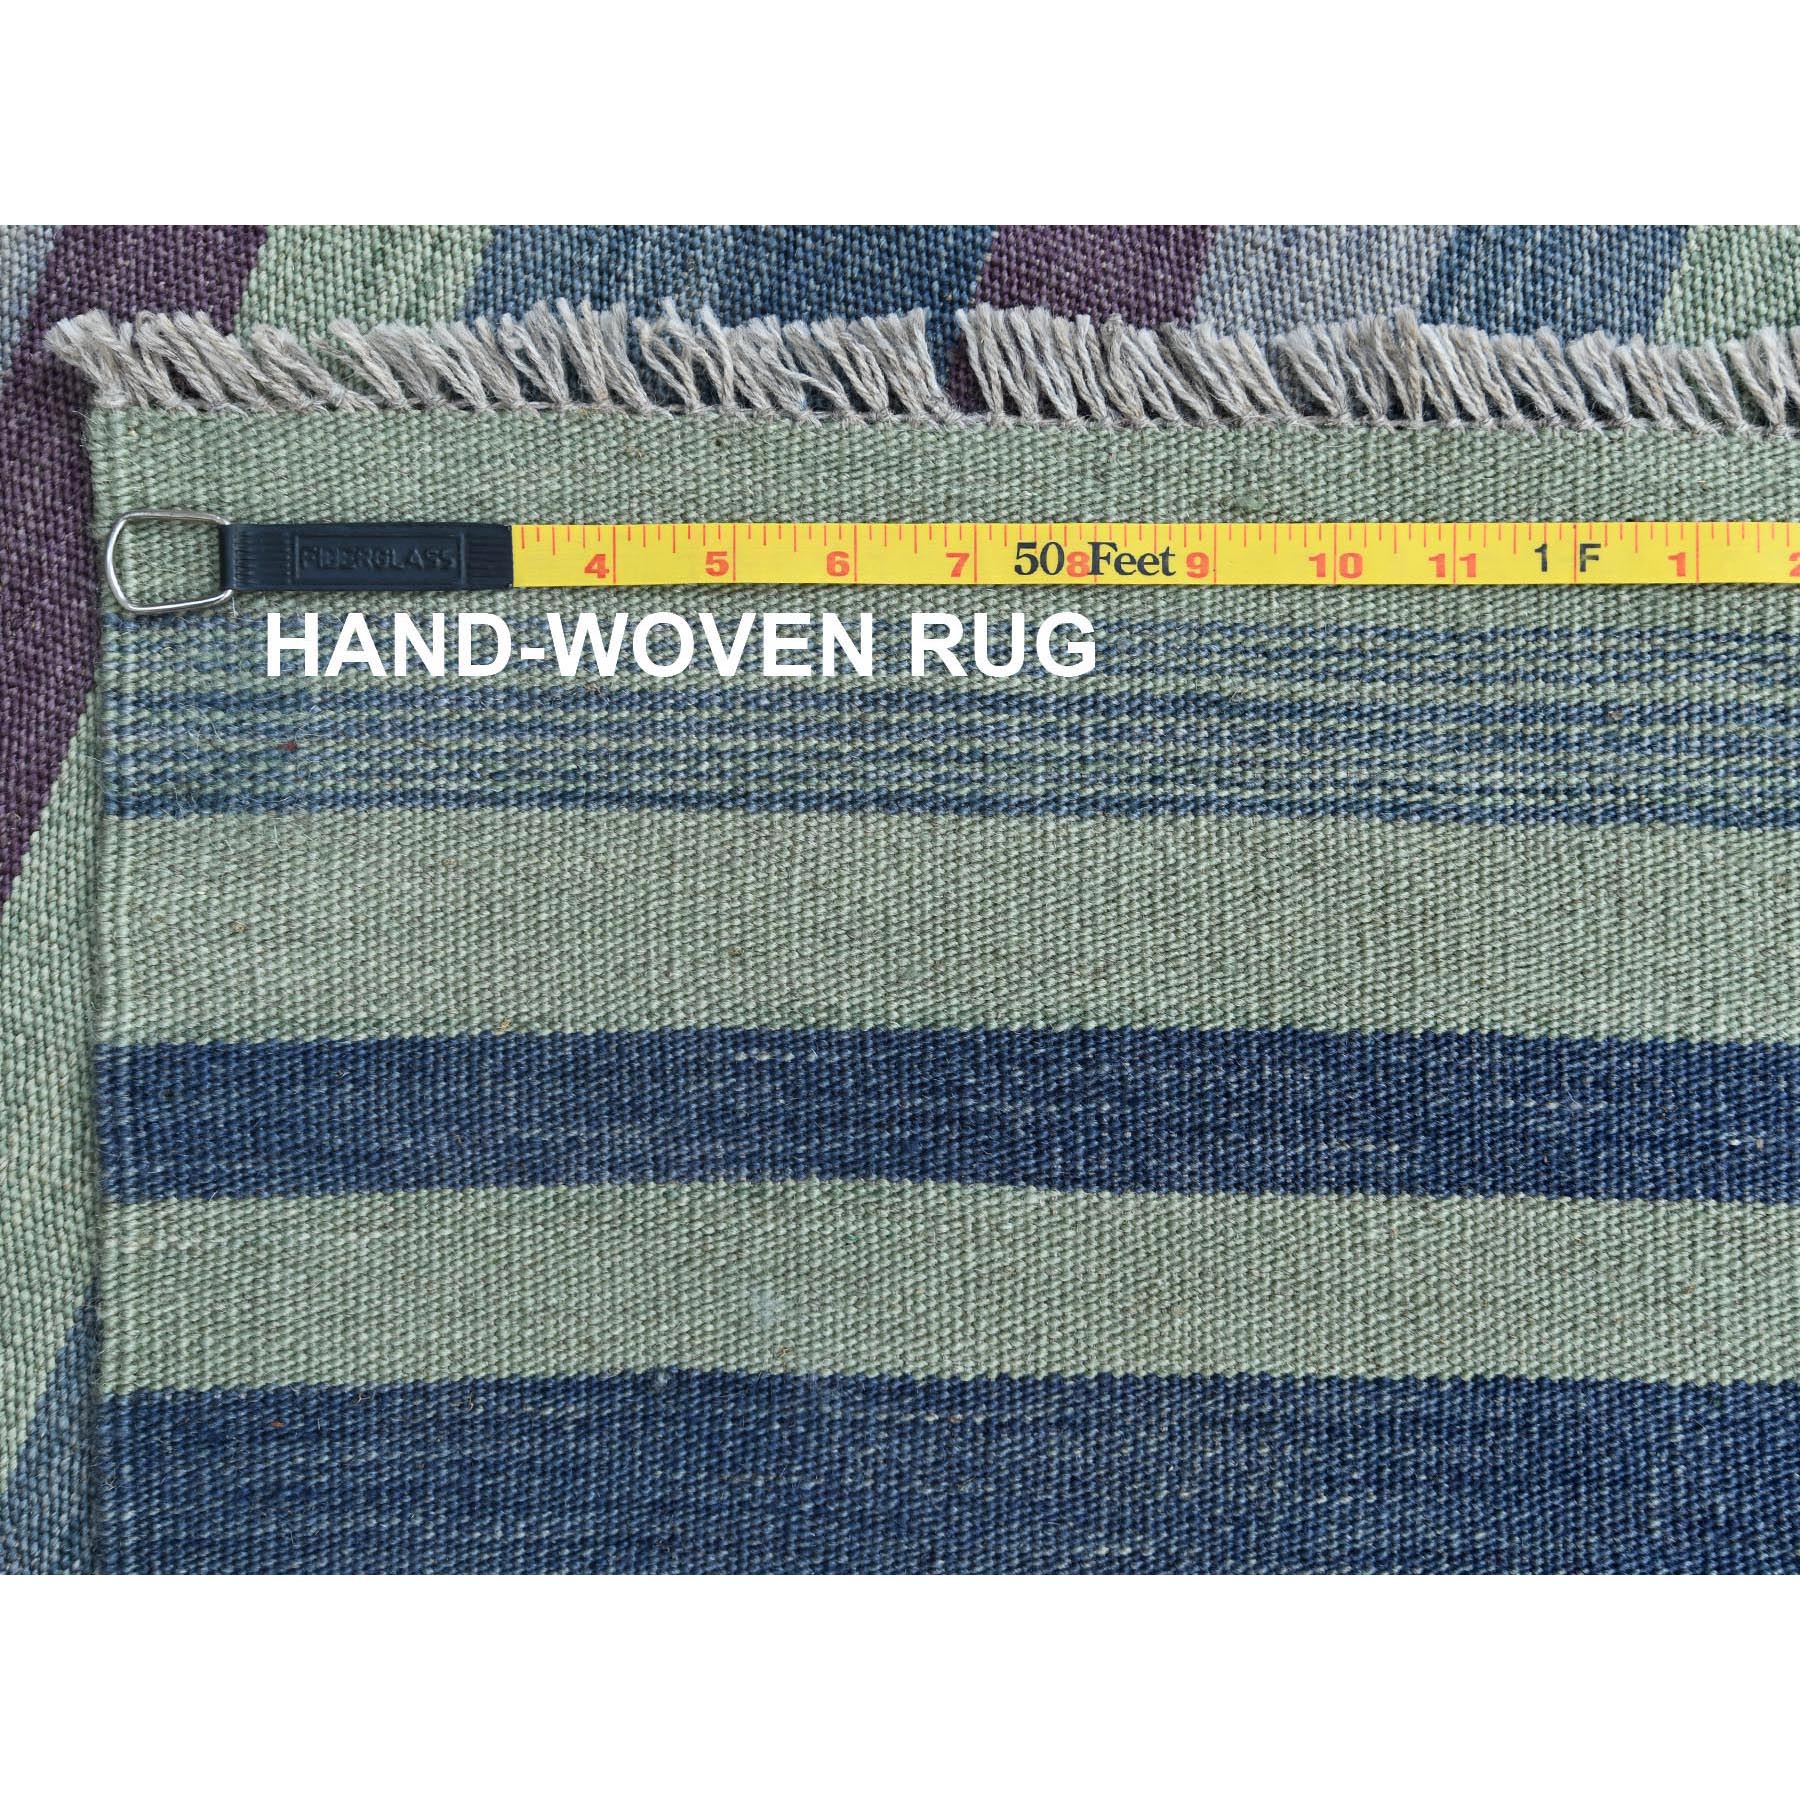 9'4"x12'1" Flat Weave Kilim Pure Wool Hand Woven Stripe Design Reversible Oriental Rug 